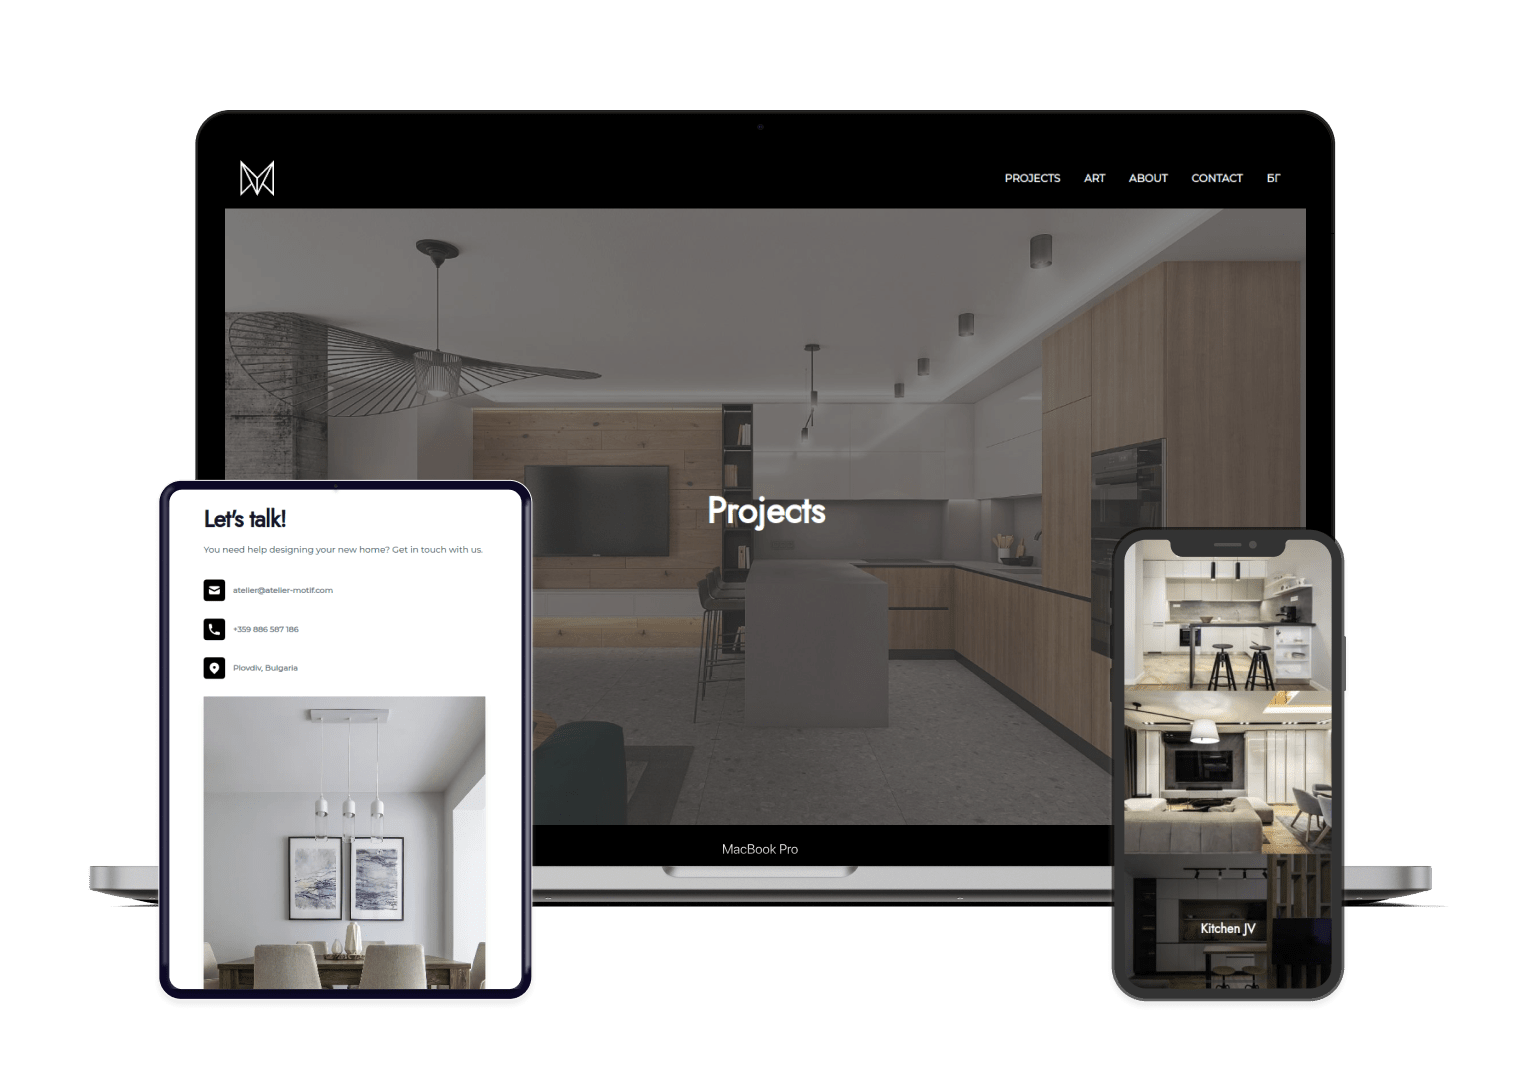 best website for interior design